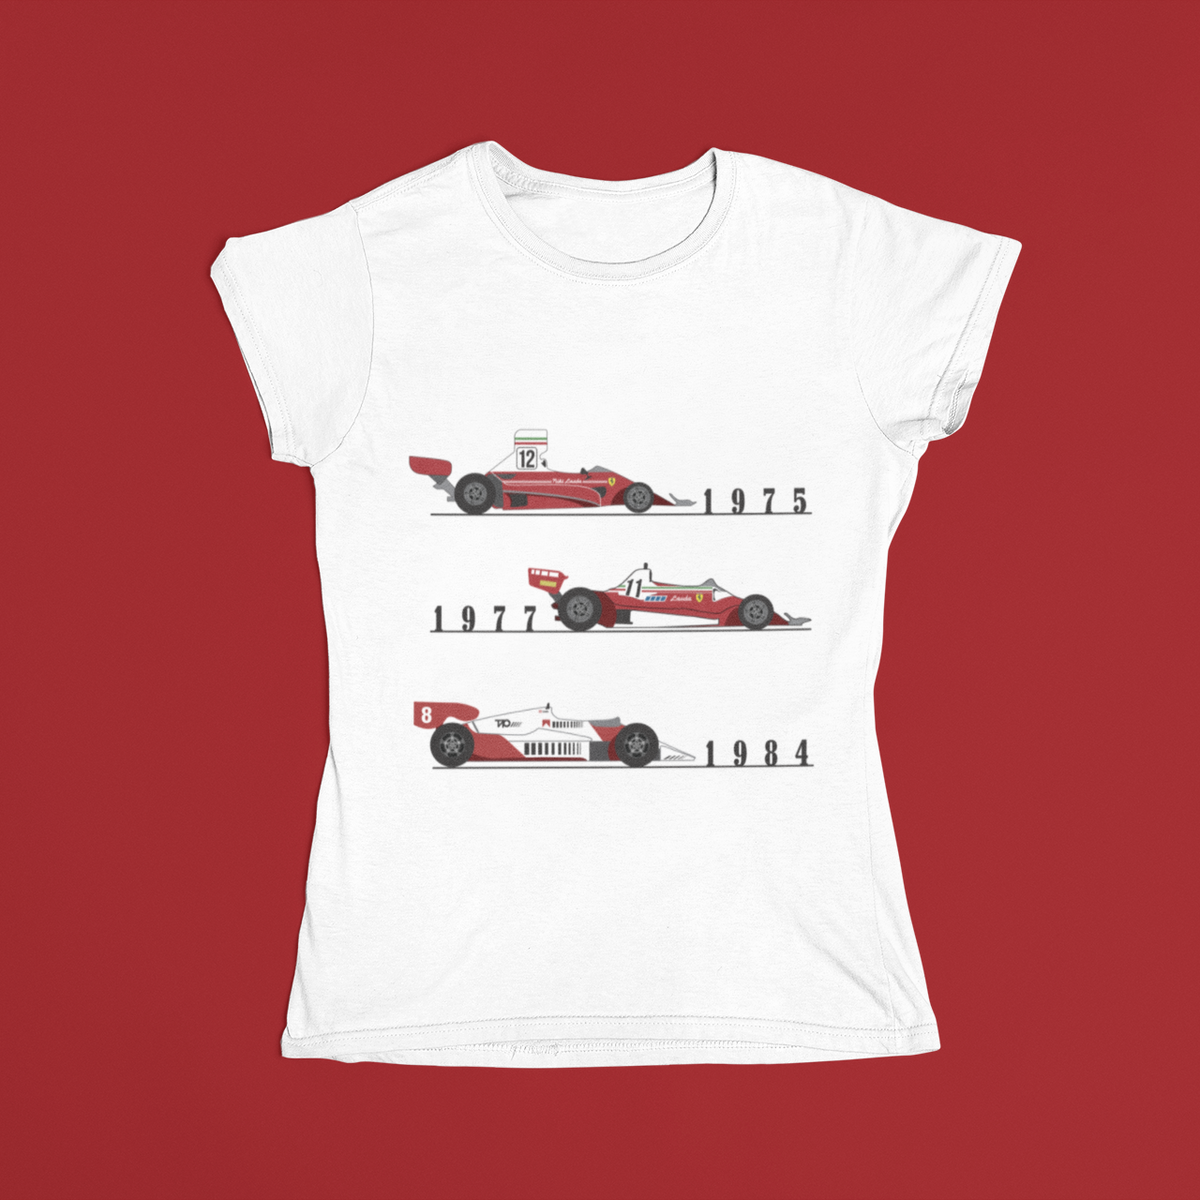 Nome do produto: Babylook Niki Lauda F1 Legend